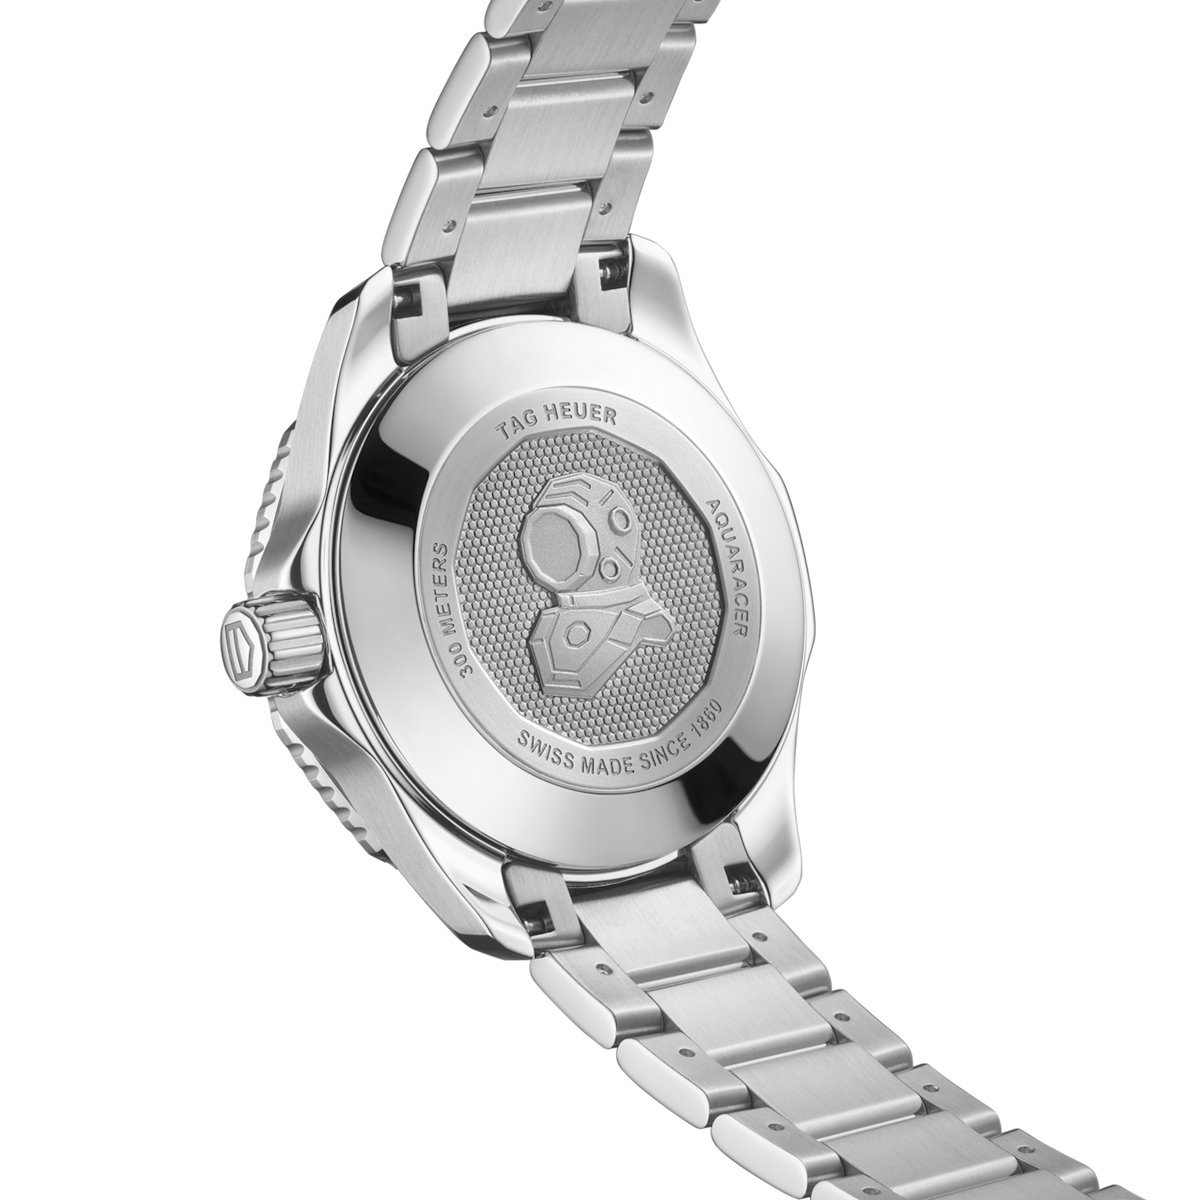 Aquaracer Professional 300 Date 36mm Watch